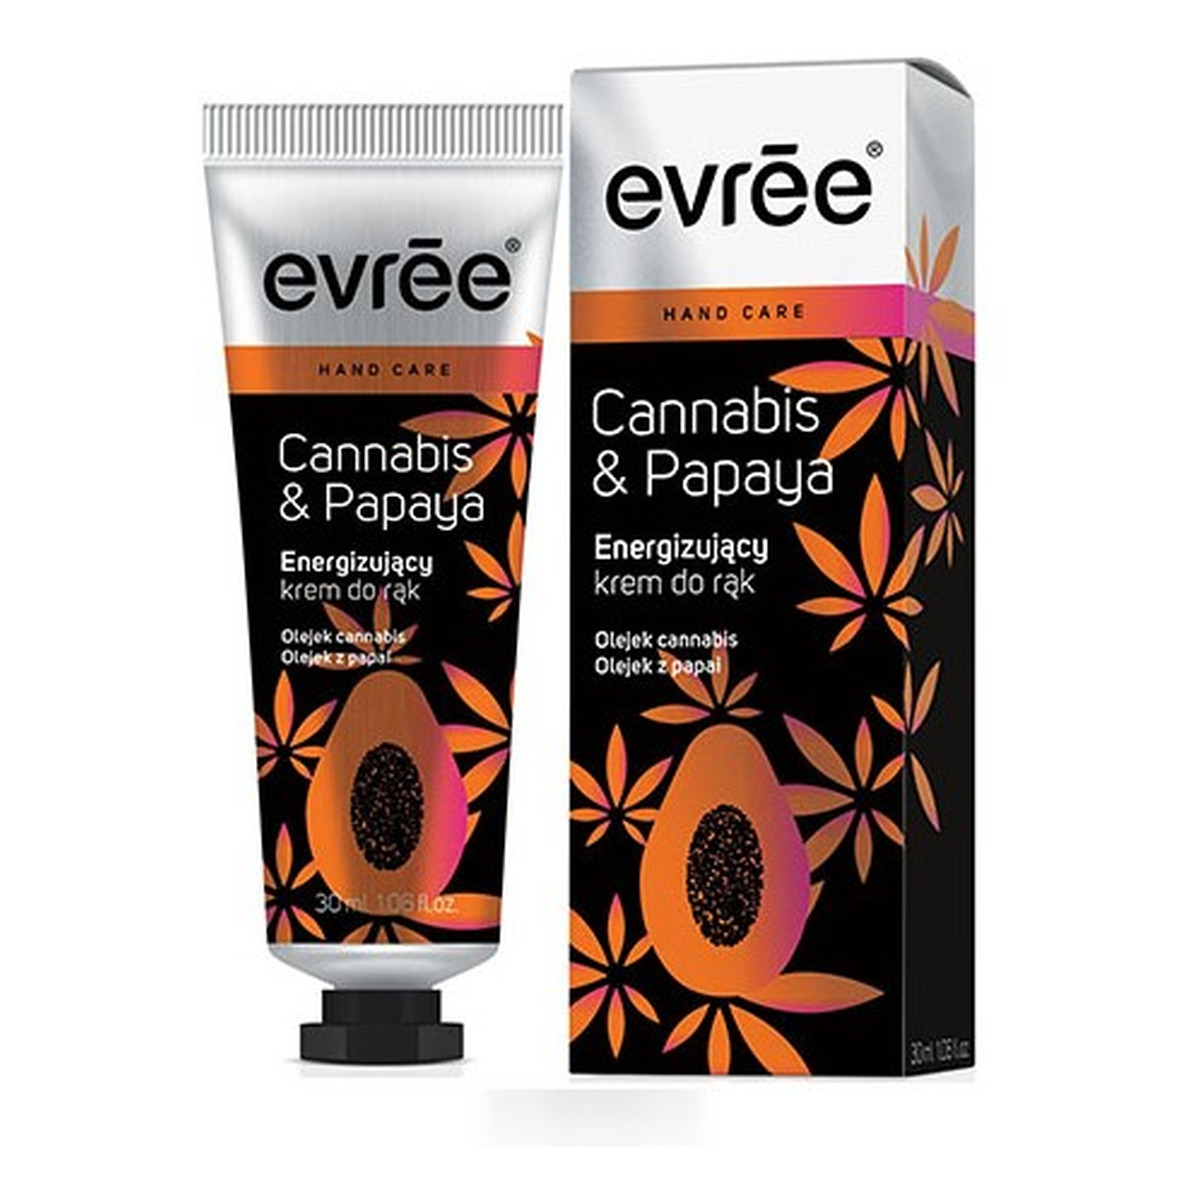 Evree Hand Care Cannabis & Papaya Energizujący krem do rąk 30ml